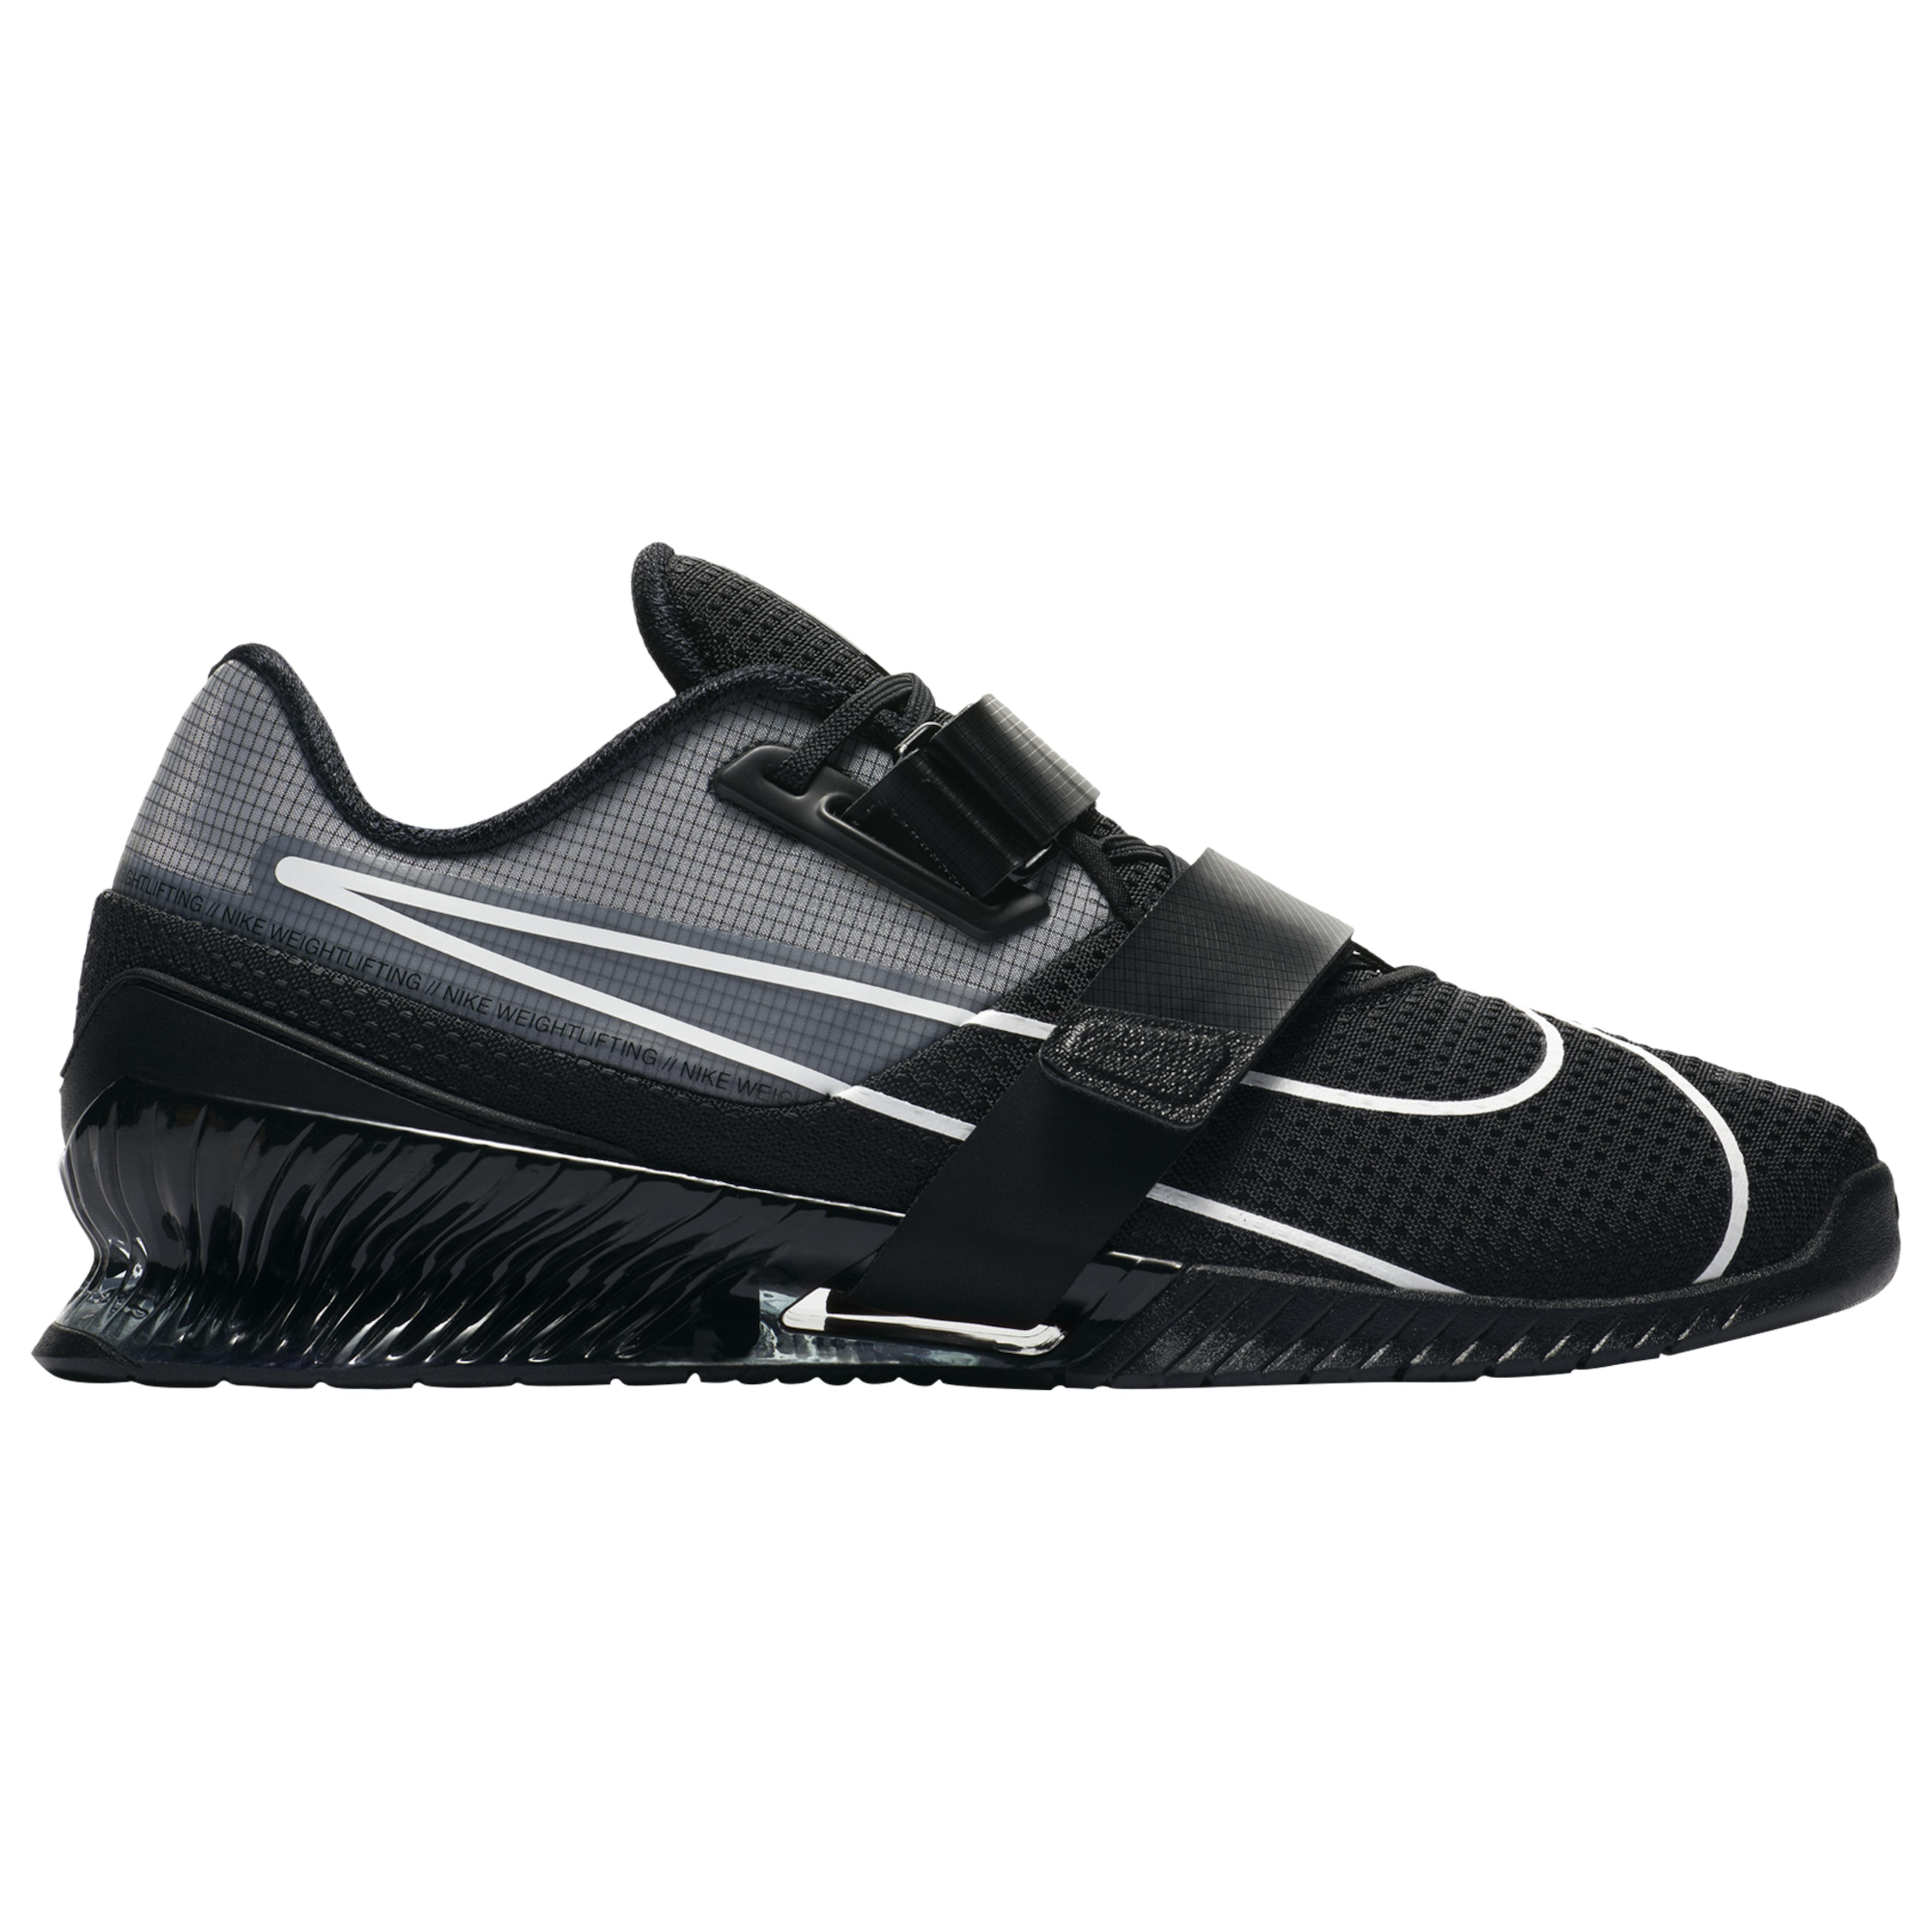 Nike Romaleos 4 in Black/White/Black (Black) for Men - Lyst